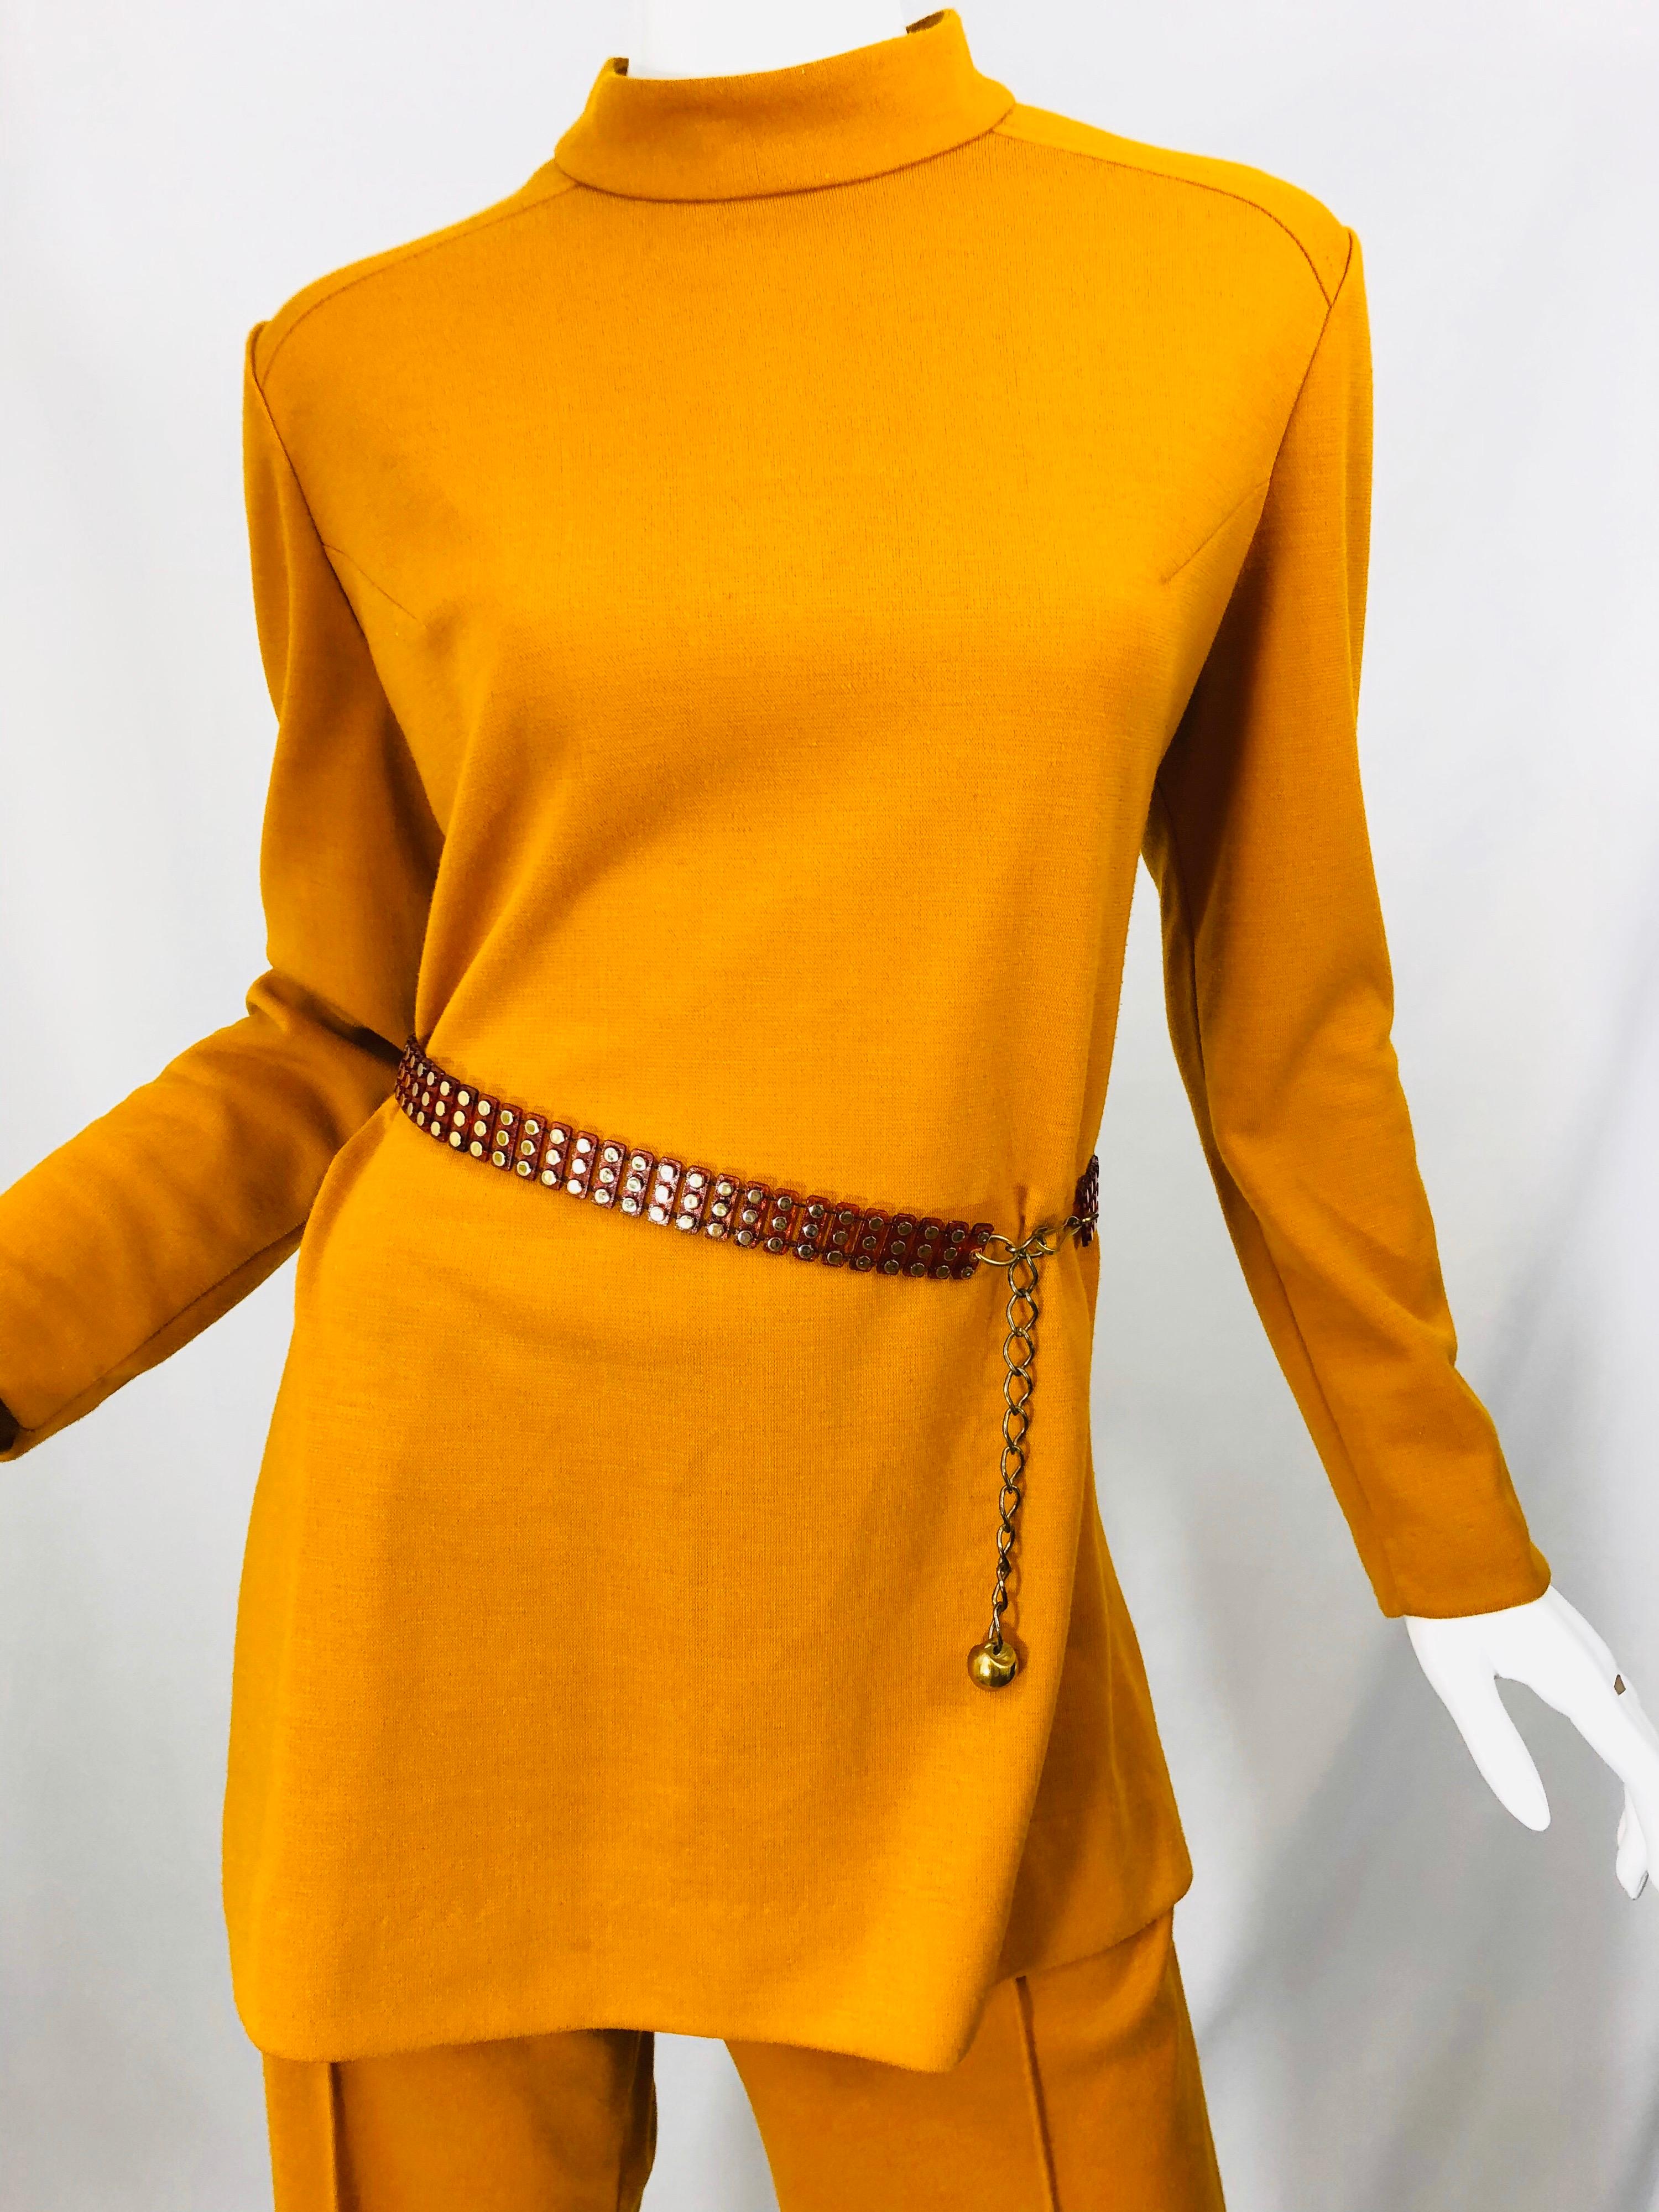 Women's 1970s Marigold Mustard Yellow Four Piece Vintage 70s Knit Shirt + Pants + Belt For Sale